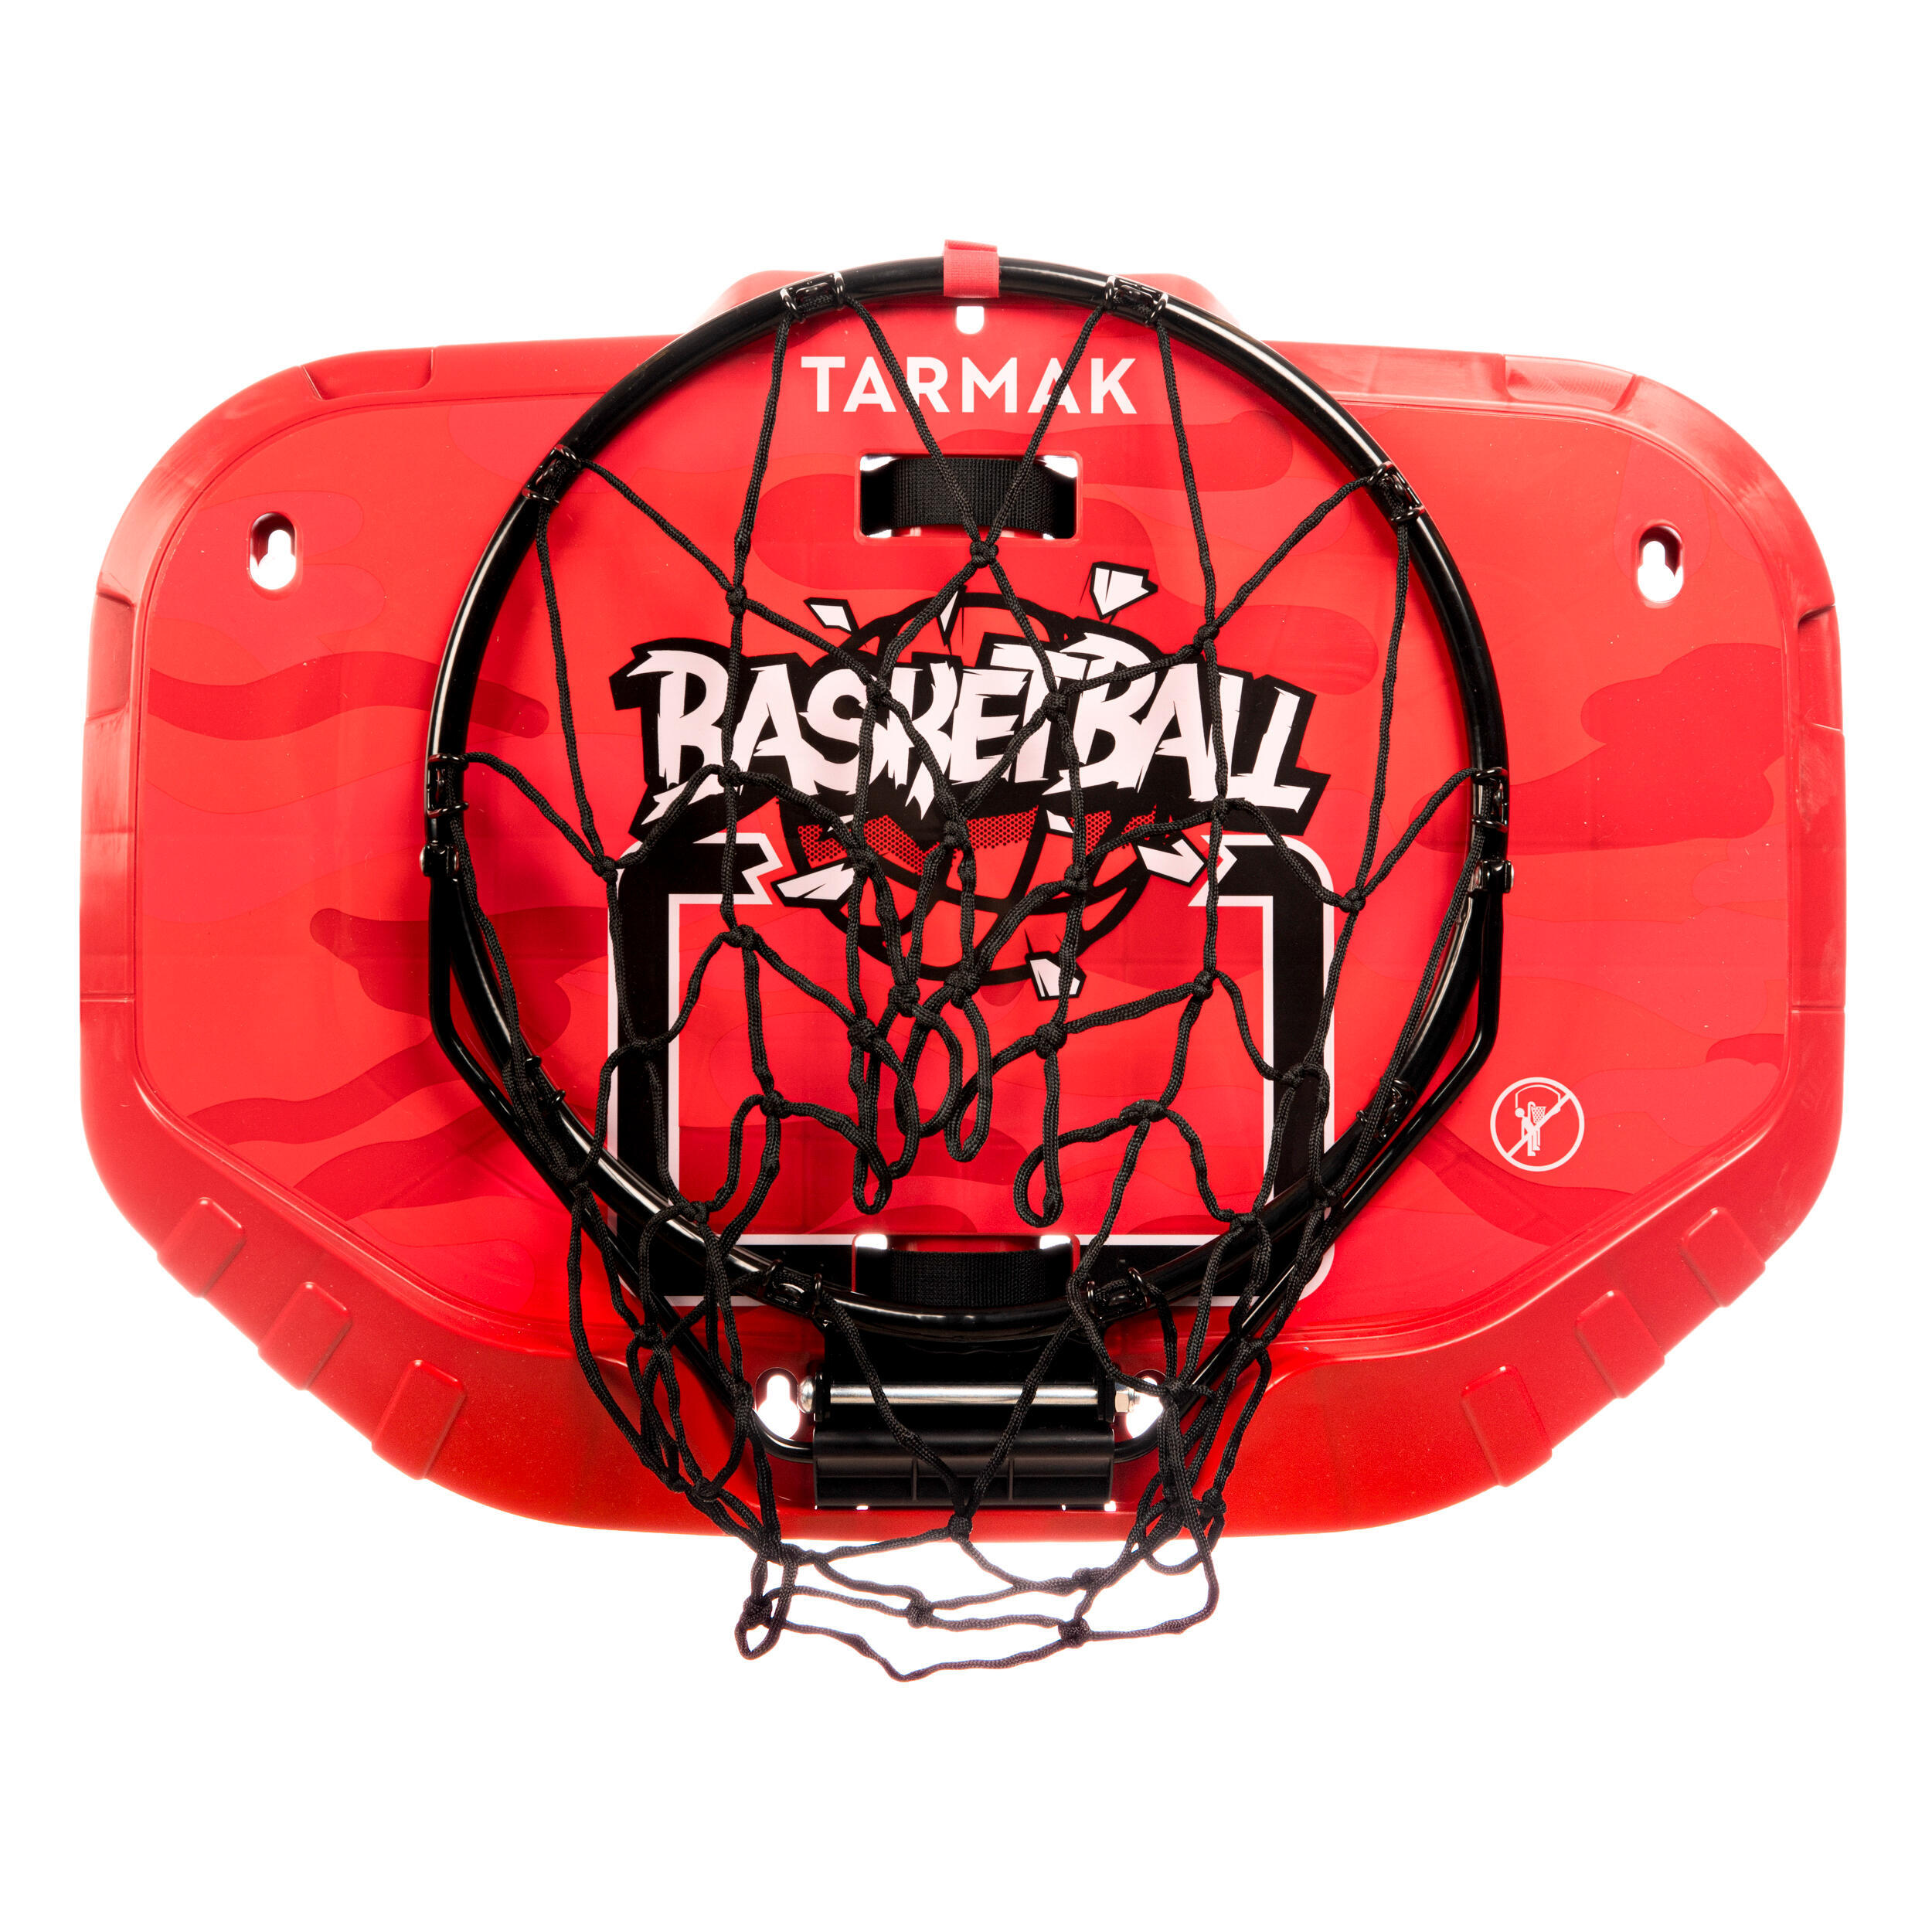 Wall-Mounted Transportable Basketball Hoop Set K900 - Red/Black 3/5